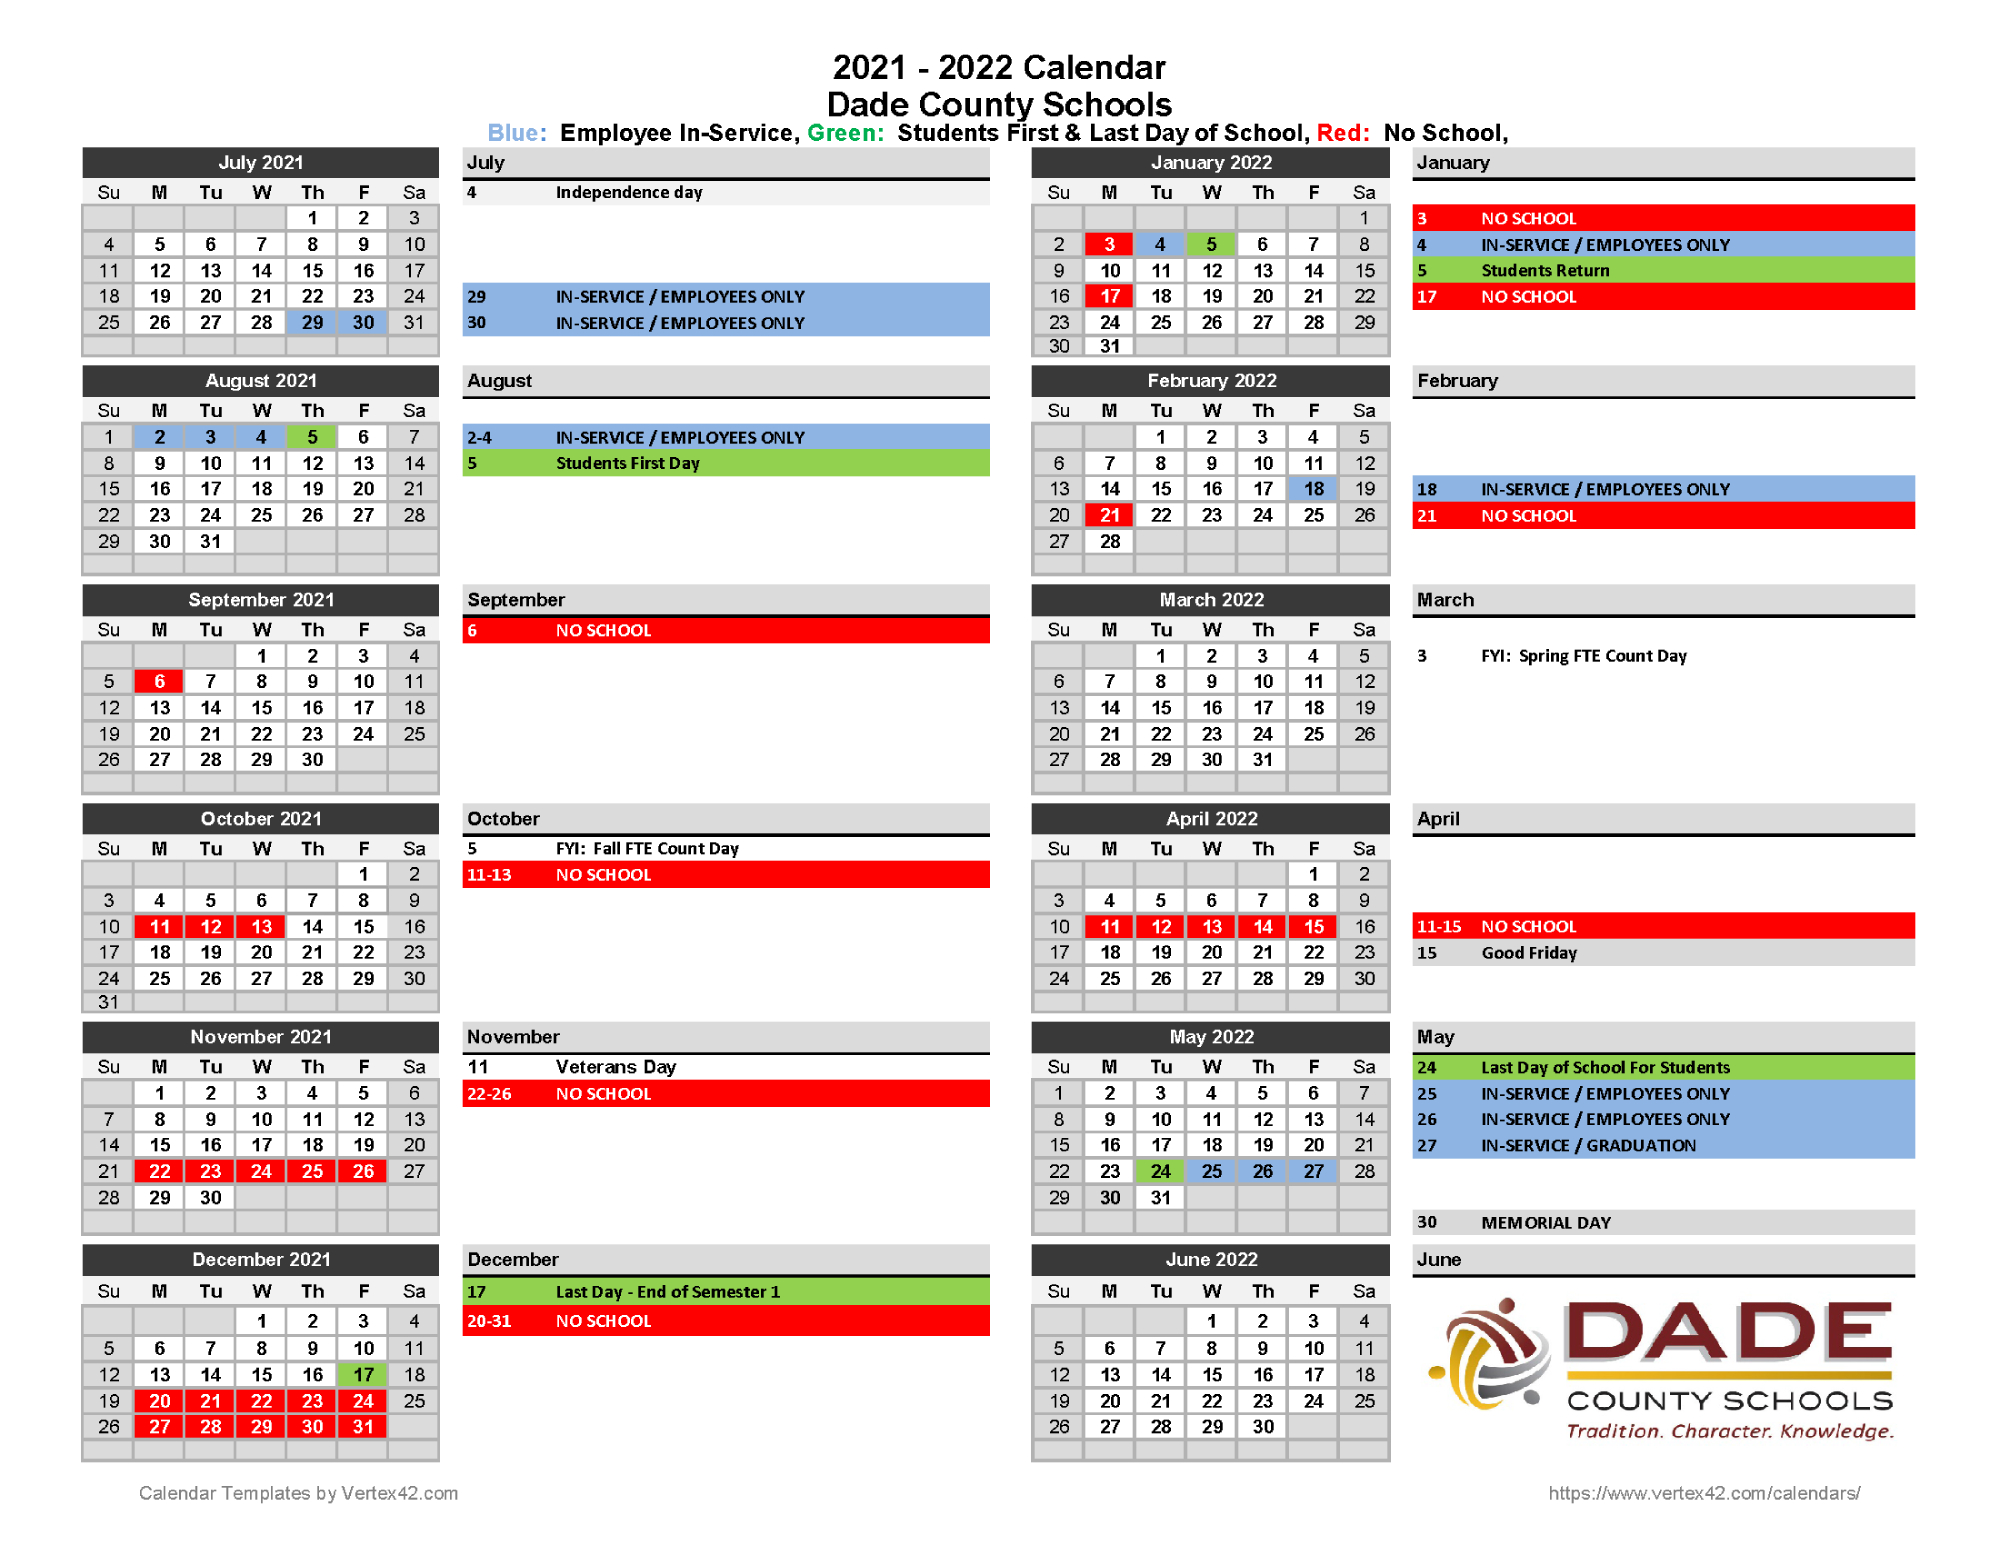 2021 - 2022 Dade County School Year Calendar Released